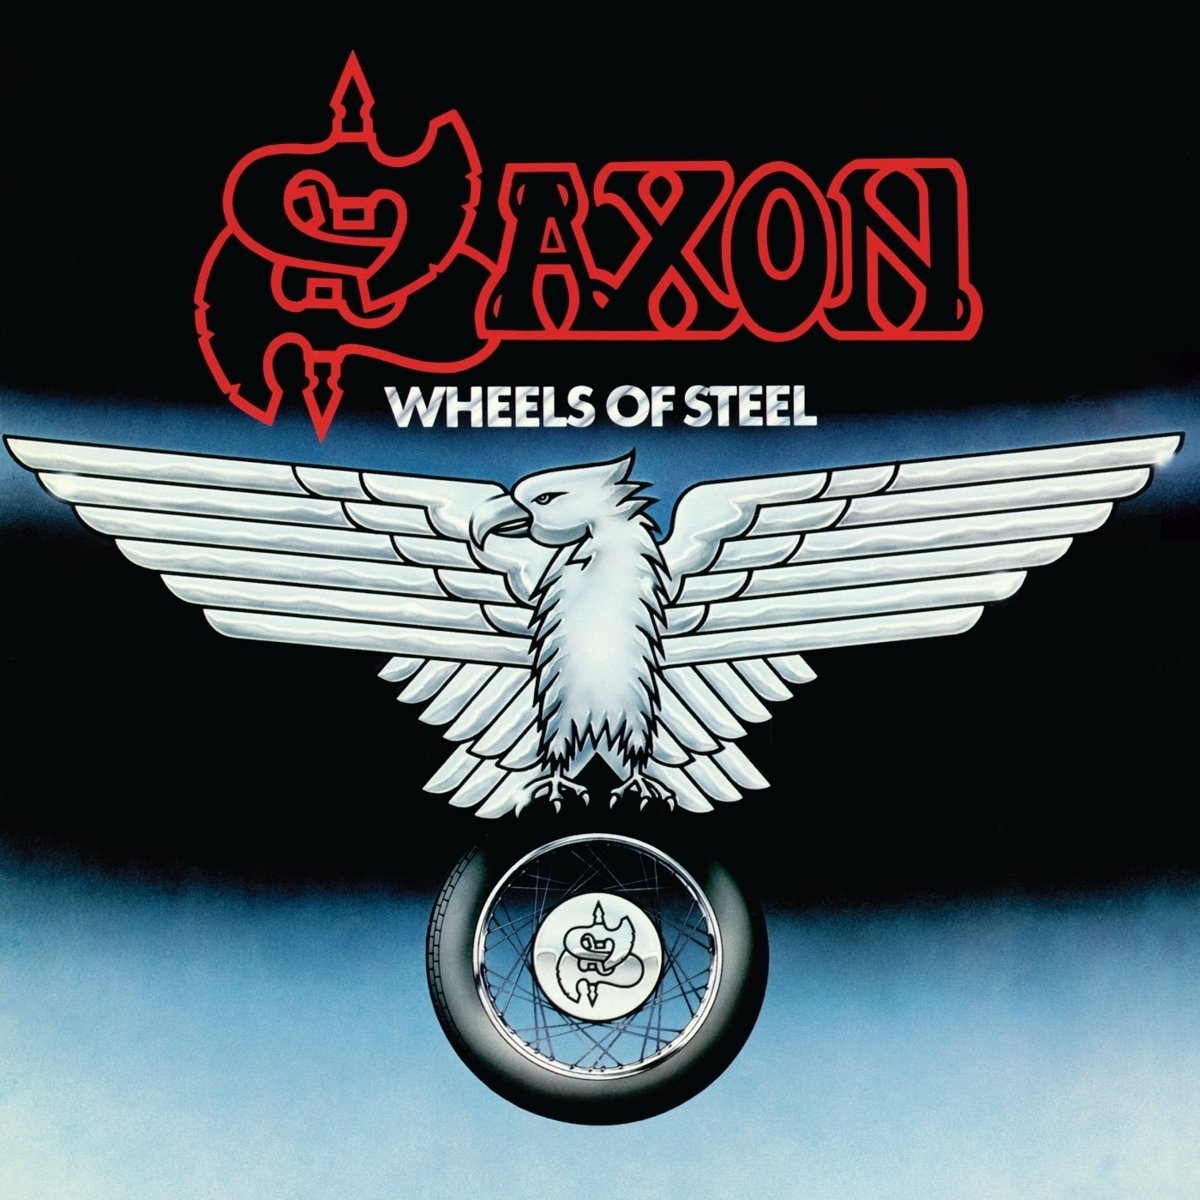 Saxon "Wheels Of Steel" Digipak CD